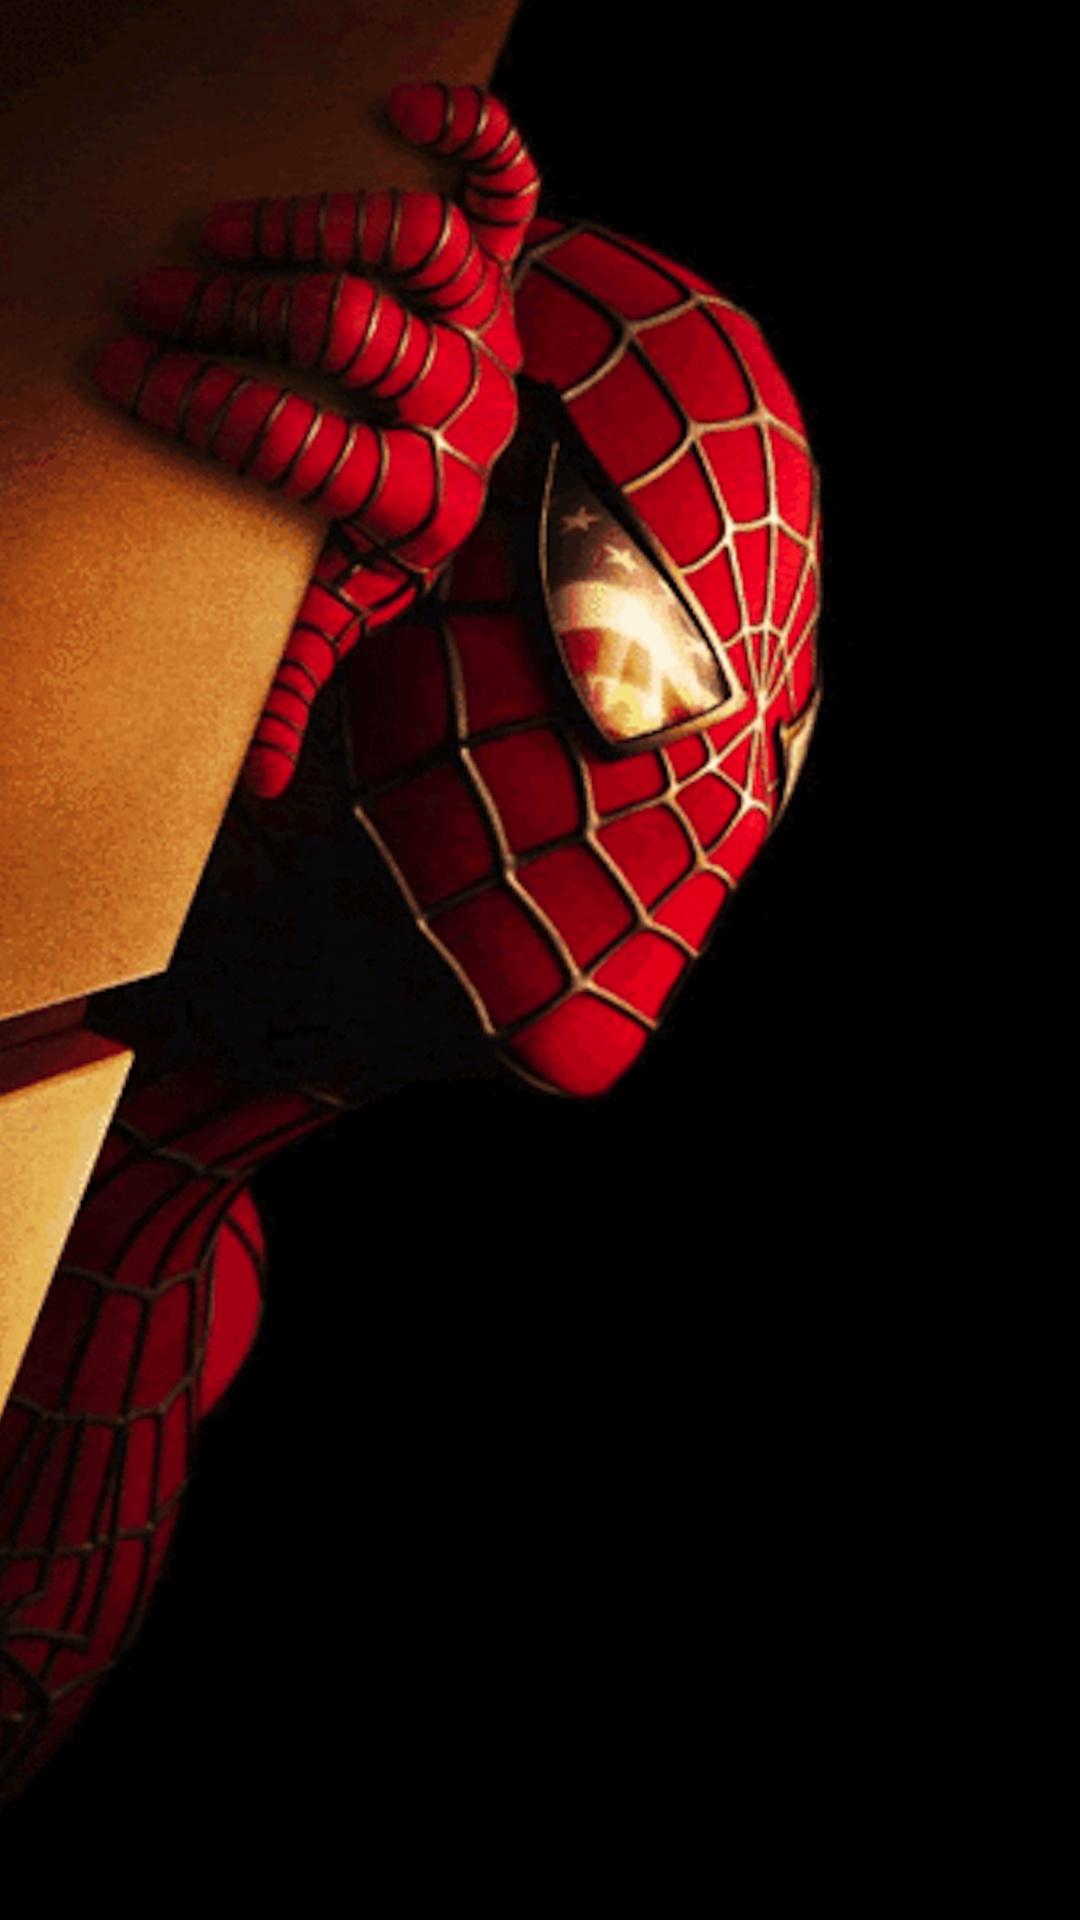 Spider-Man Phone 4K Wallpapers - Wallpaper Cave